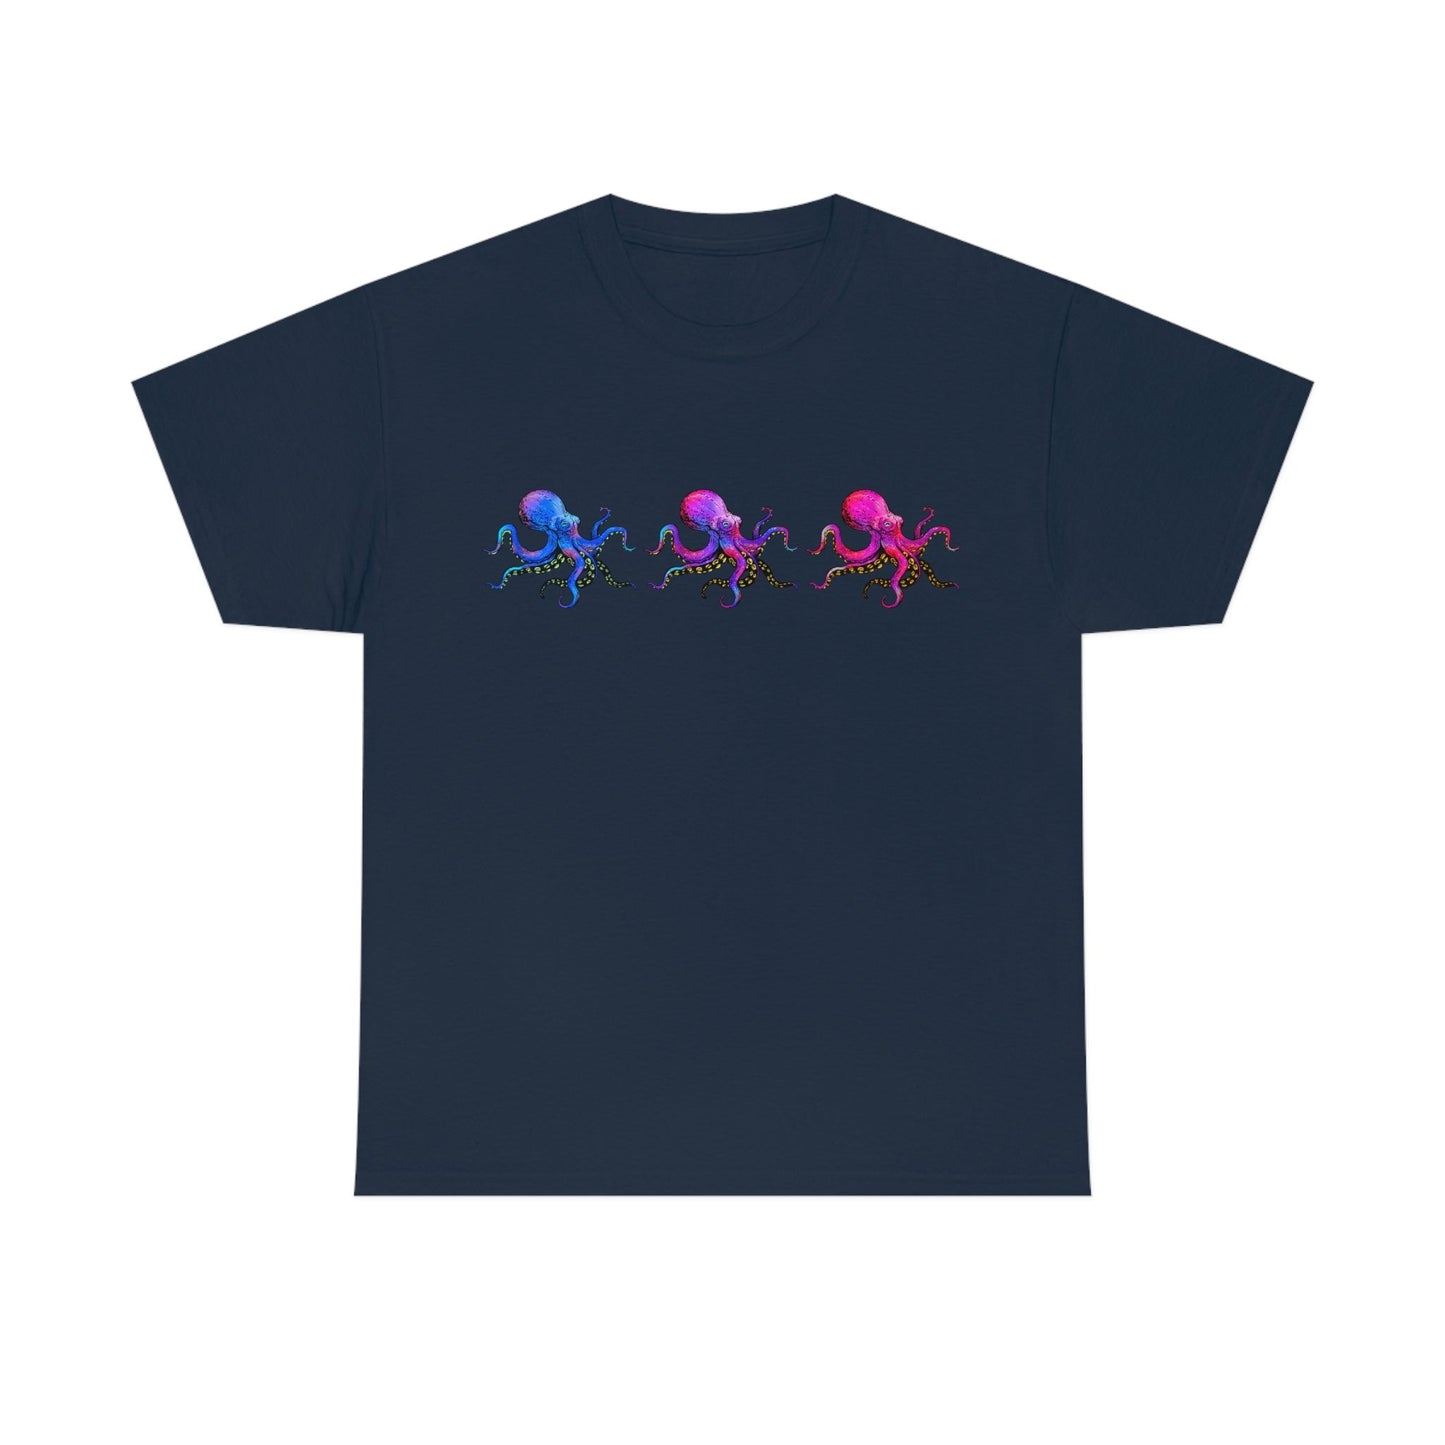 Three Krakens on a Shirt - Reef of Clowns